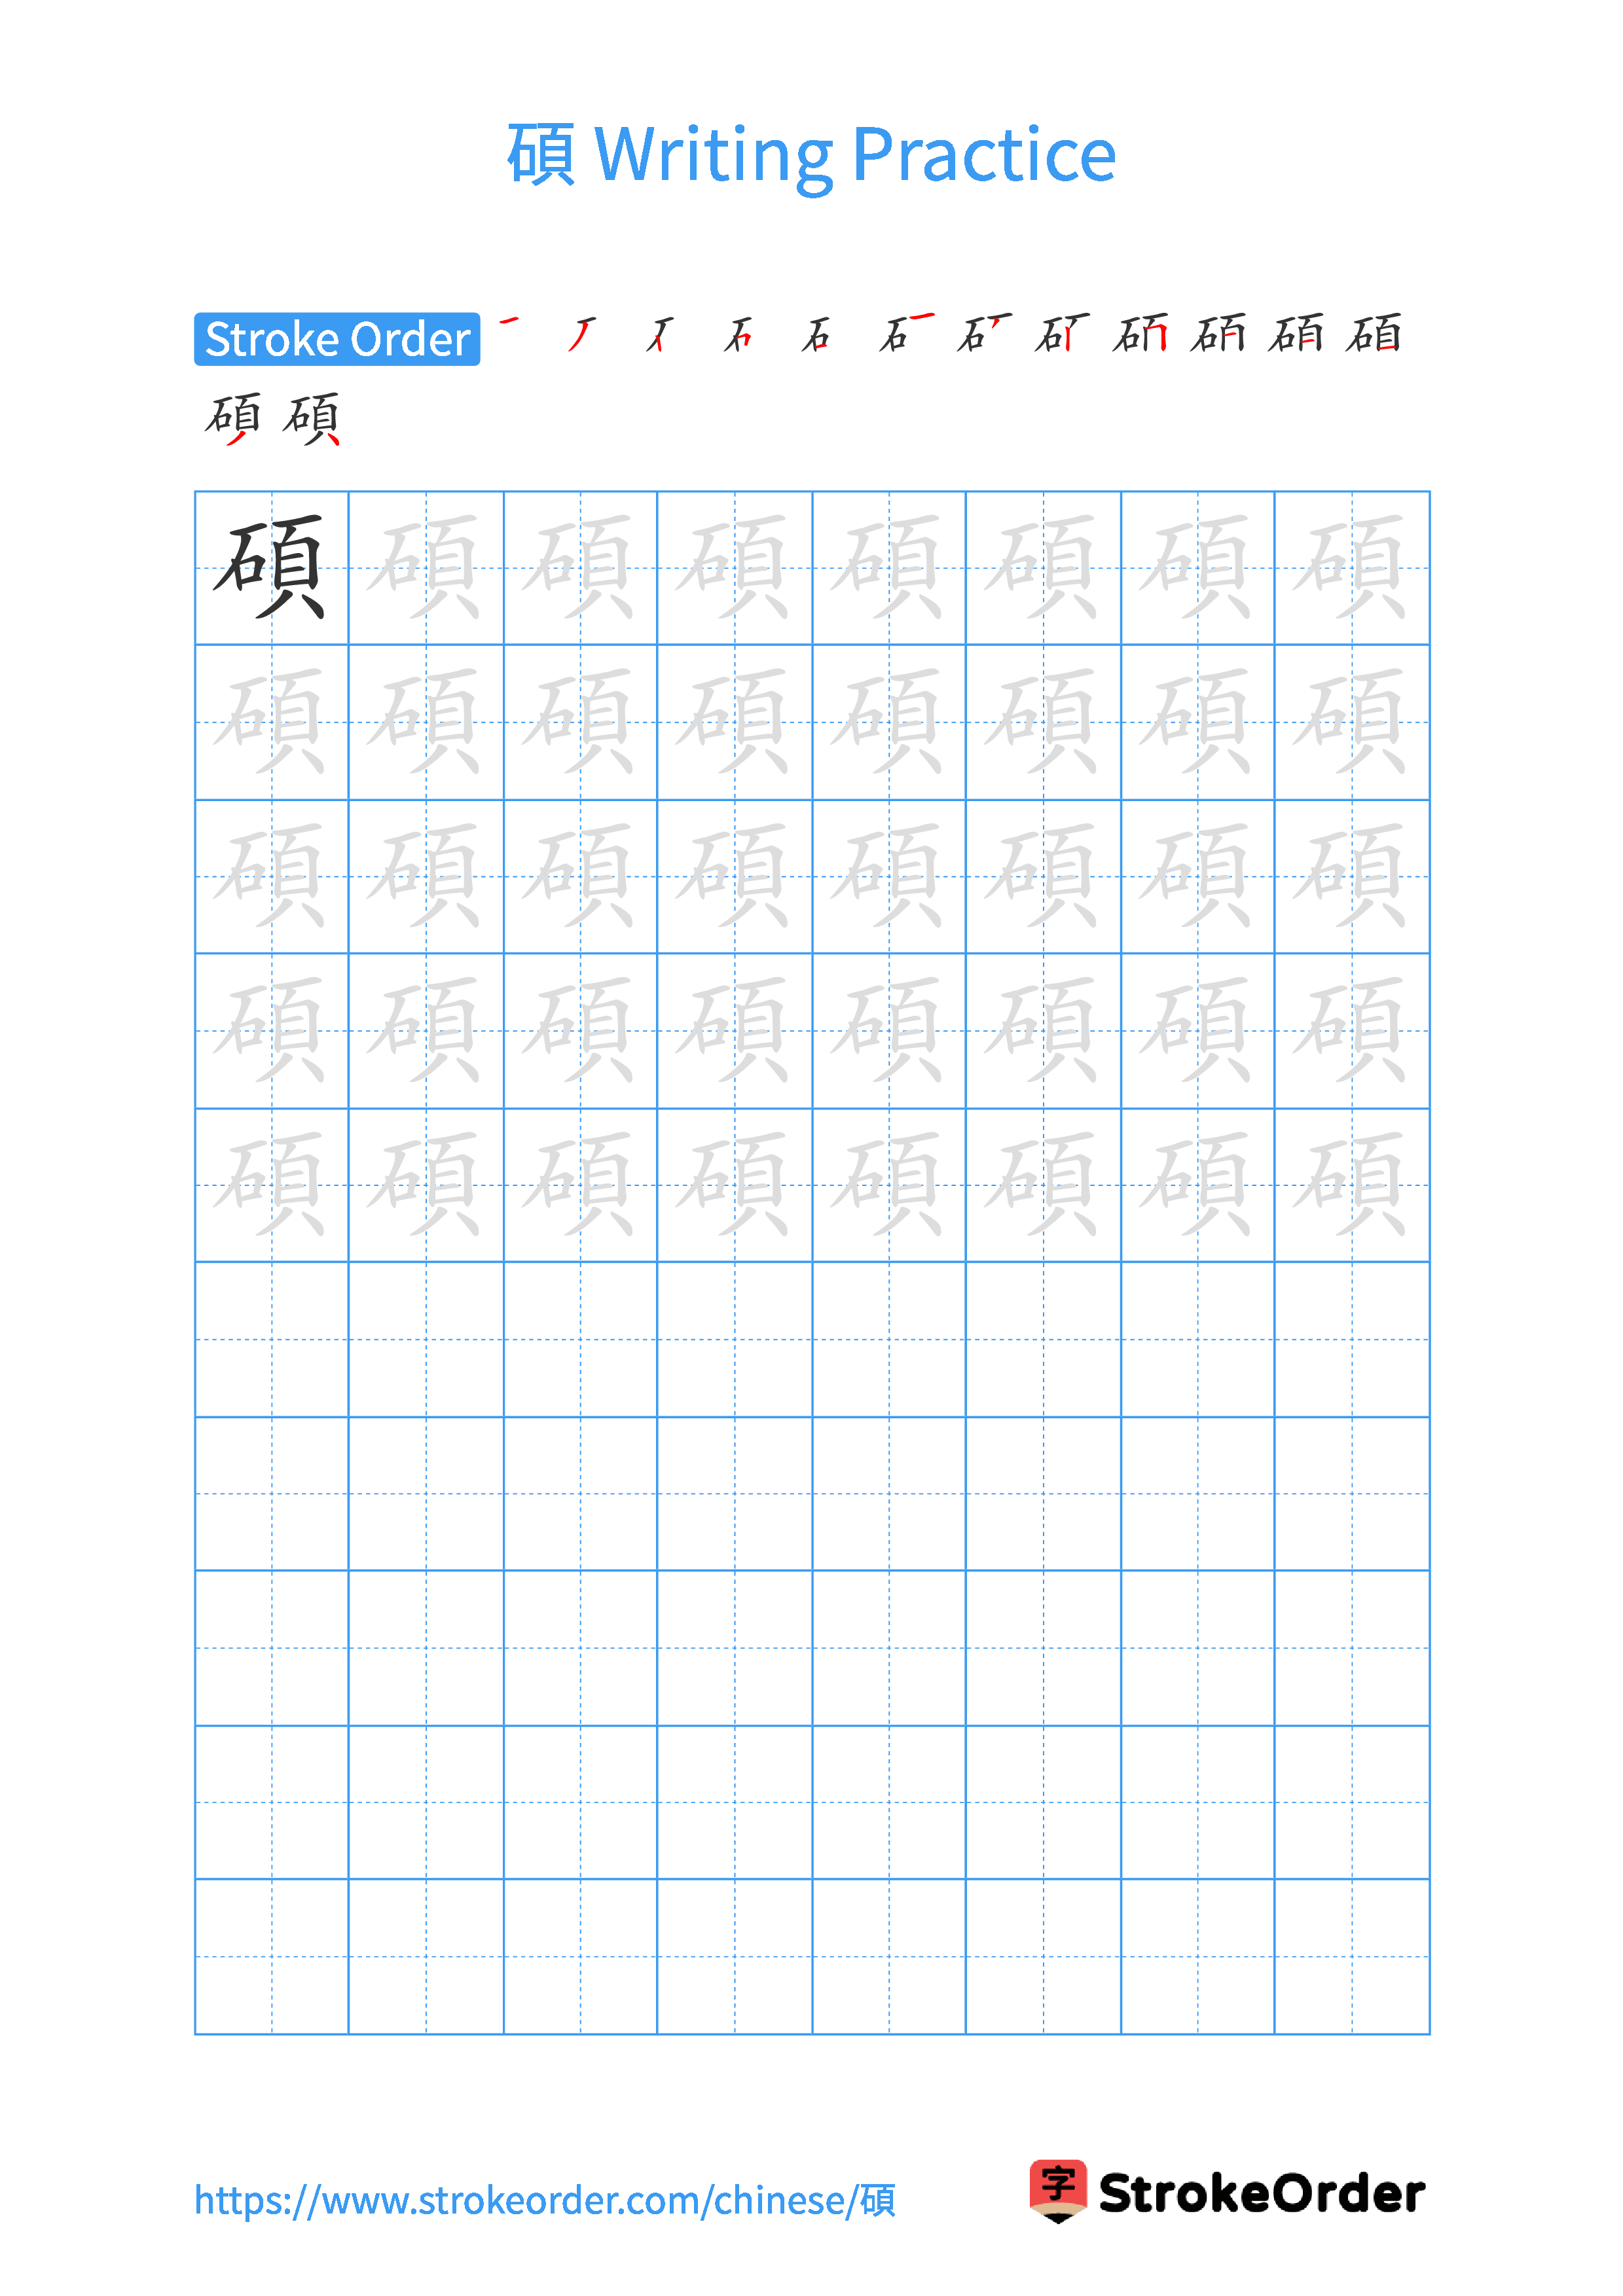 Printable Handwriting Practice Worksheet of the Chinese character 碩 in Portrait Orientation (Tian Zi Ge)